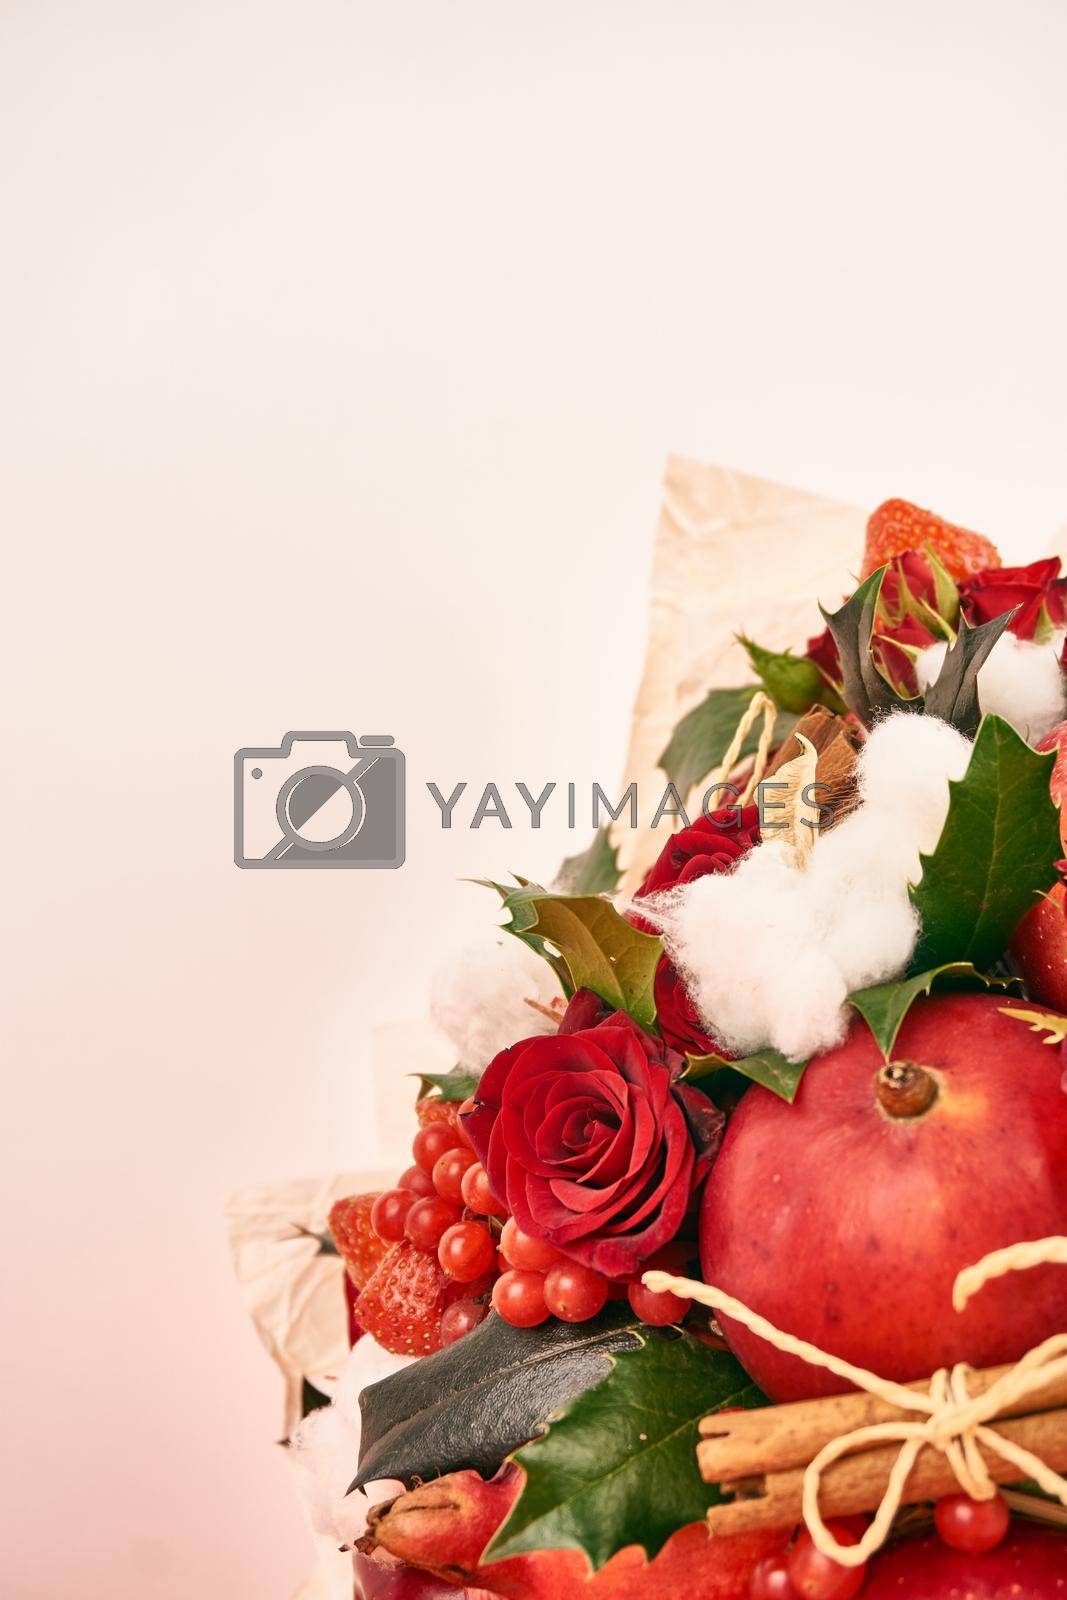 fruit vitamins decoration romance gift food pink background. High quality photo